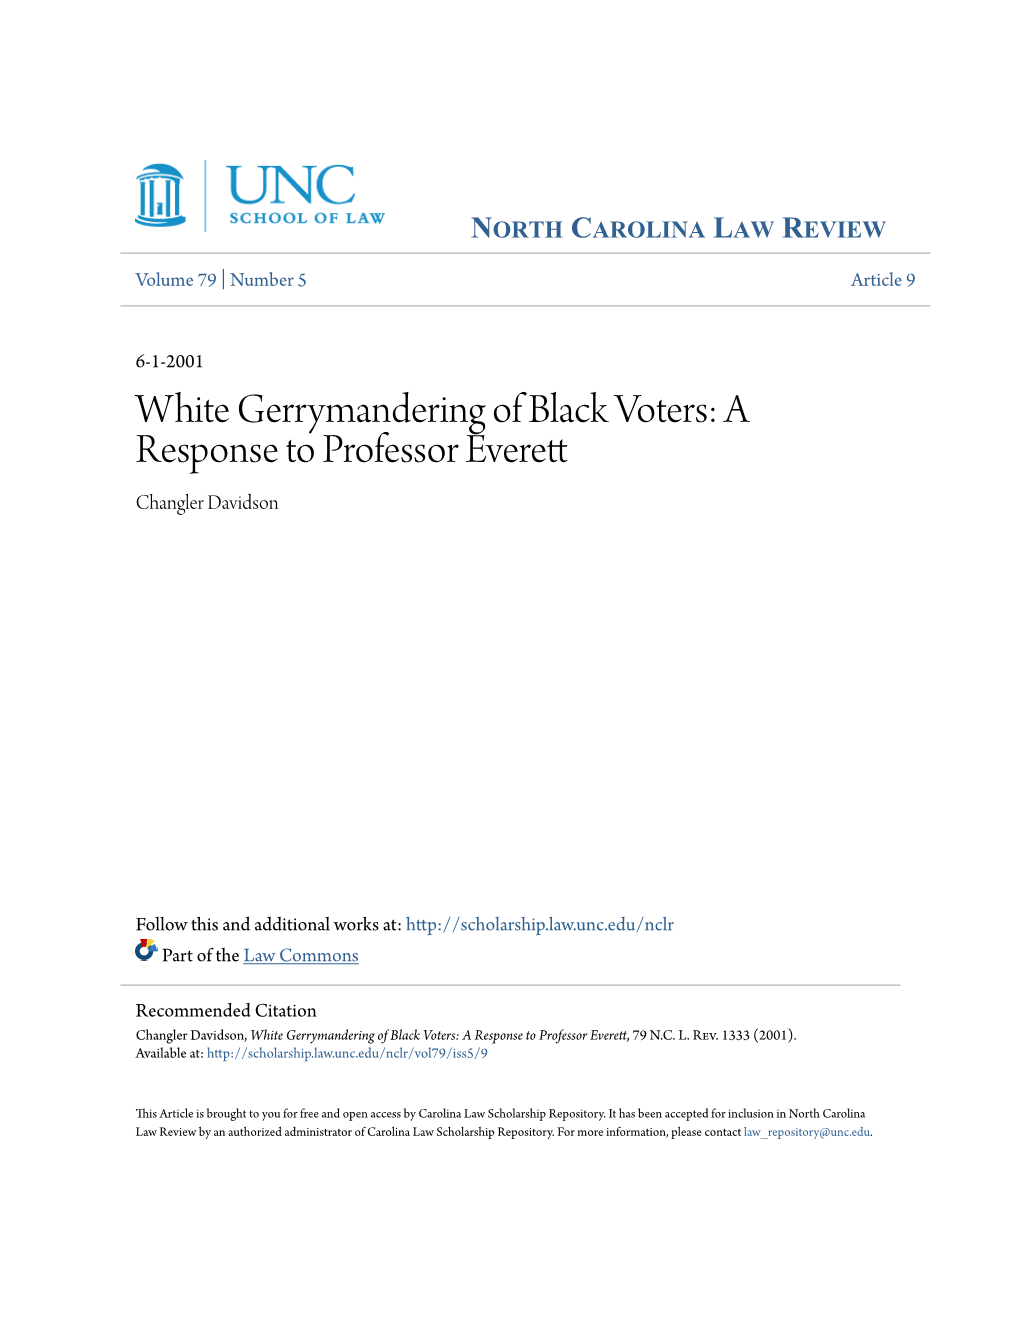 White Gerrymandering of Black Voters: a Response to Professor Everett Changler Davidson